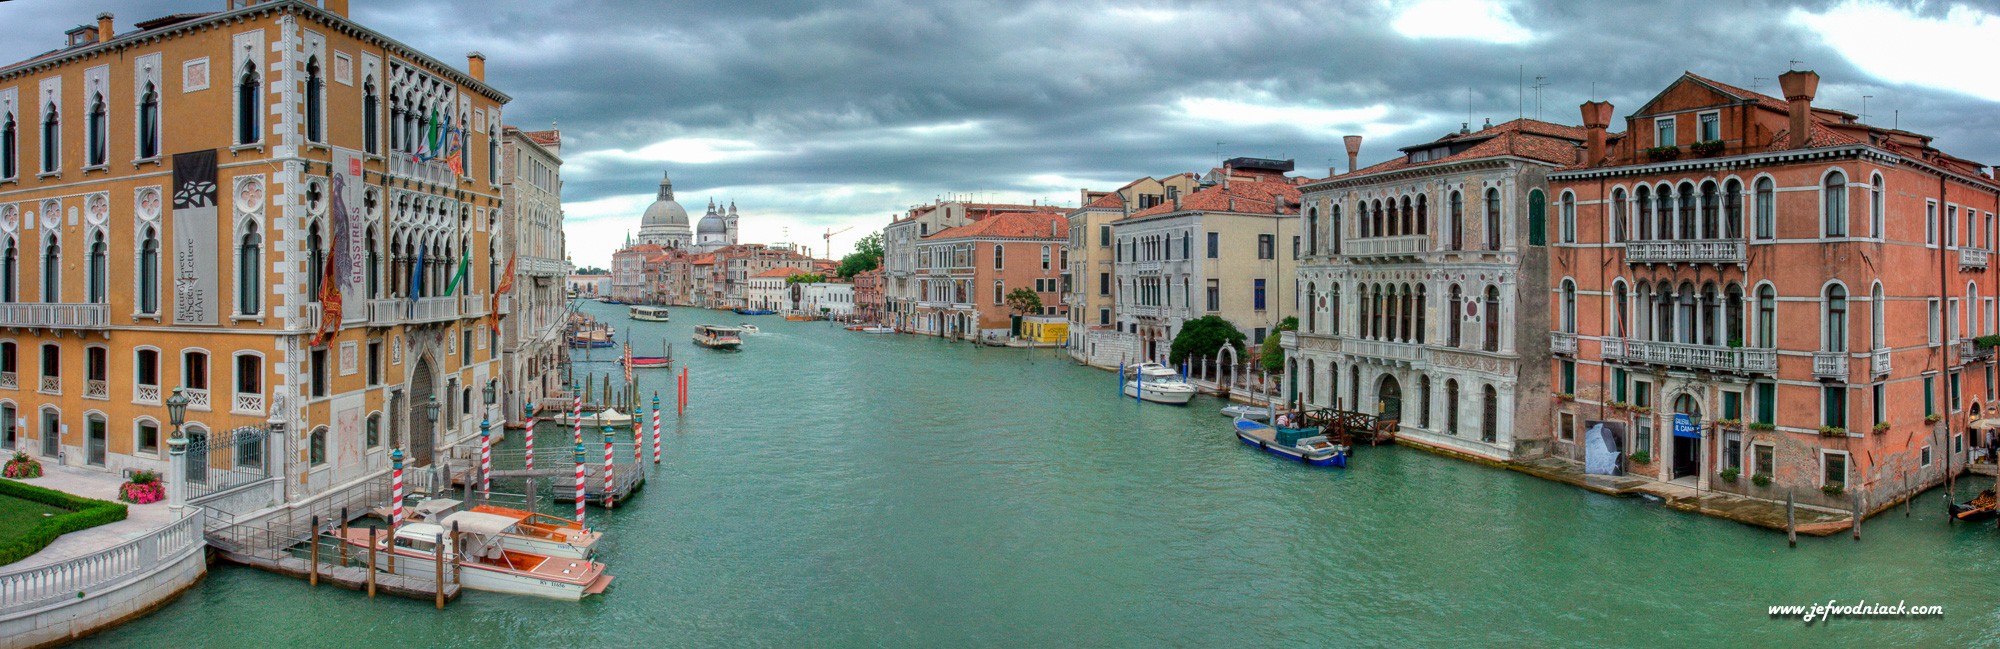 Venise en Italie, photographe Jef Wodniack.